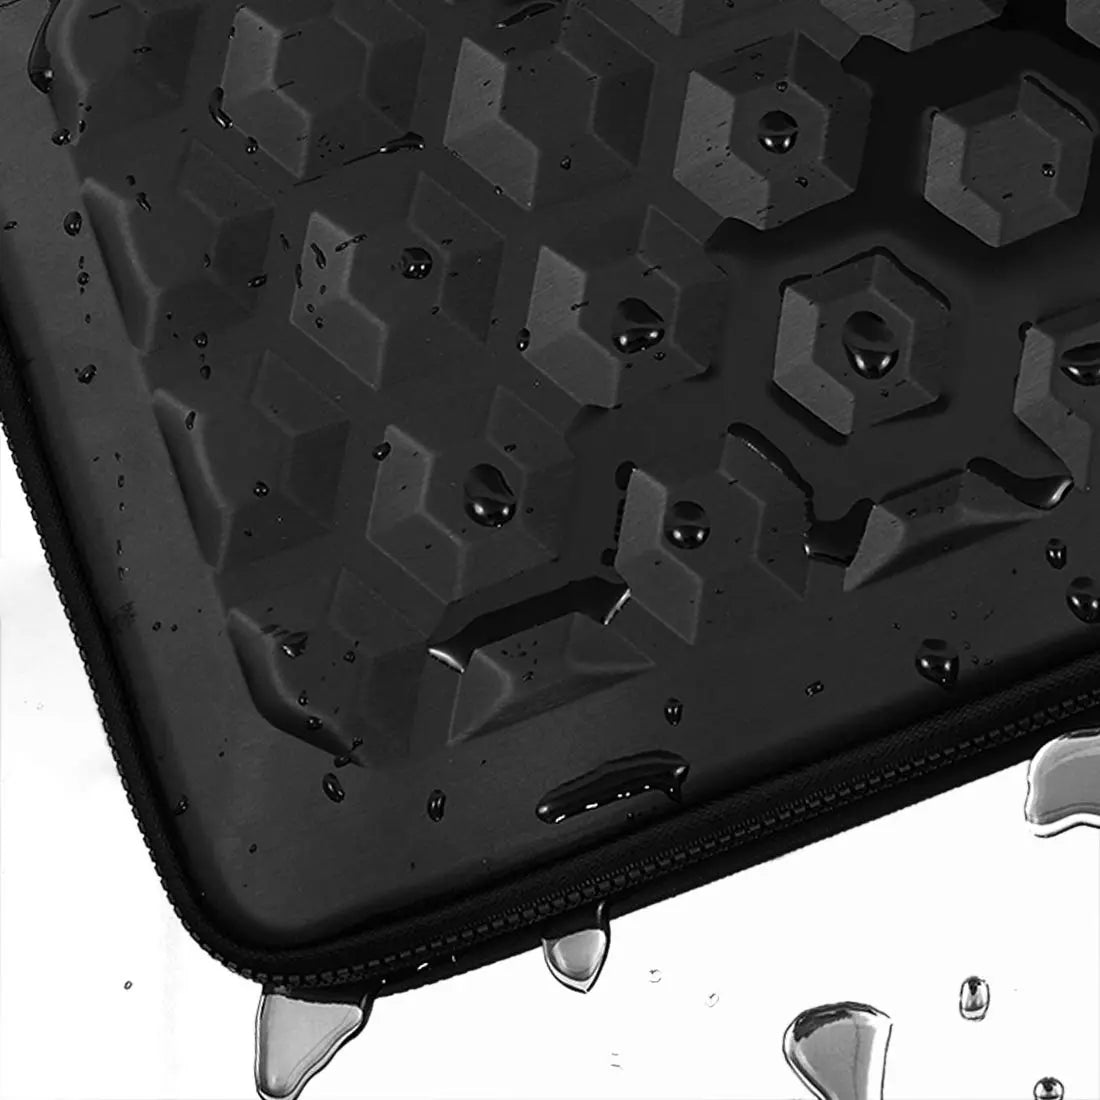 Waterproof Shock Resistant Laptop Protective Case Spike Design Laptop Bags & Cases BeSmashing 